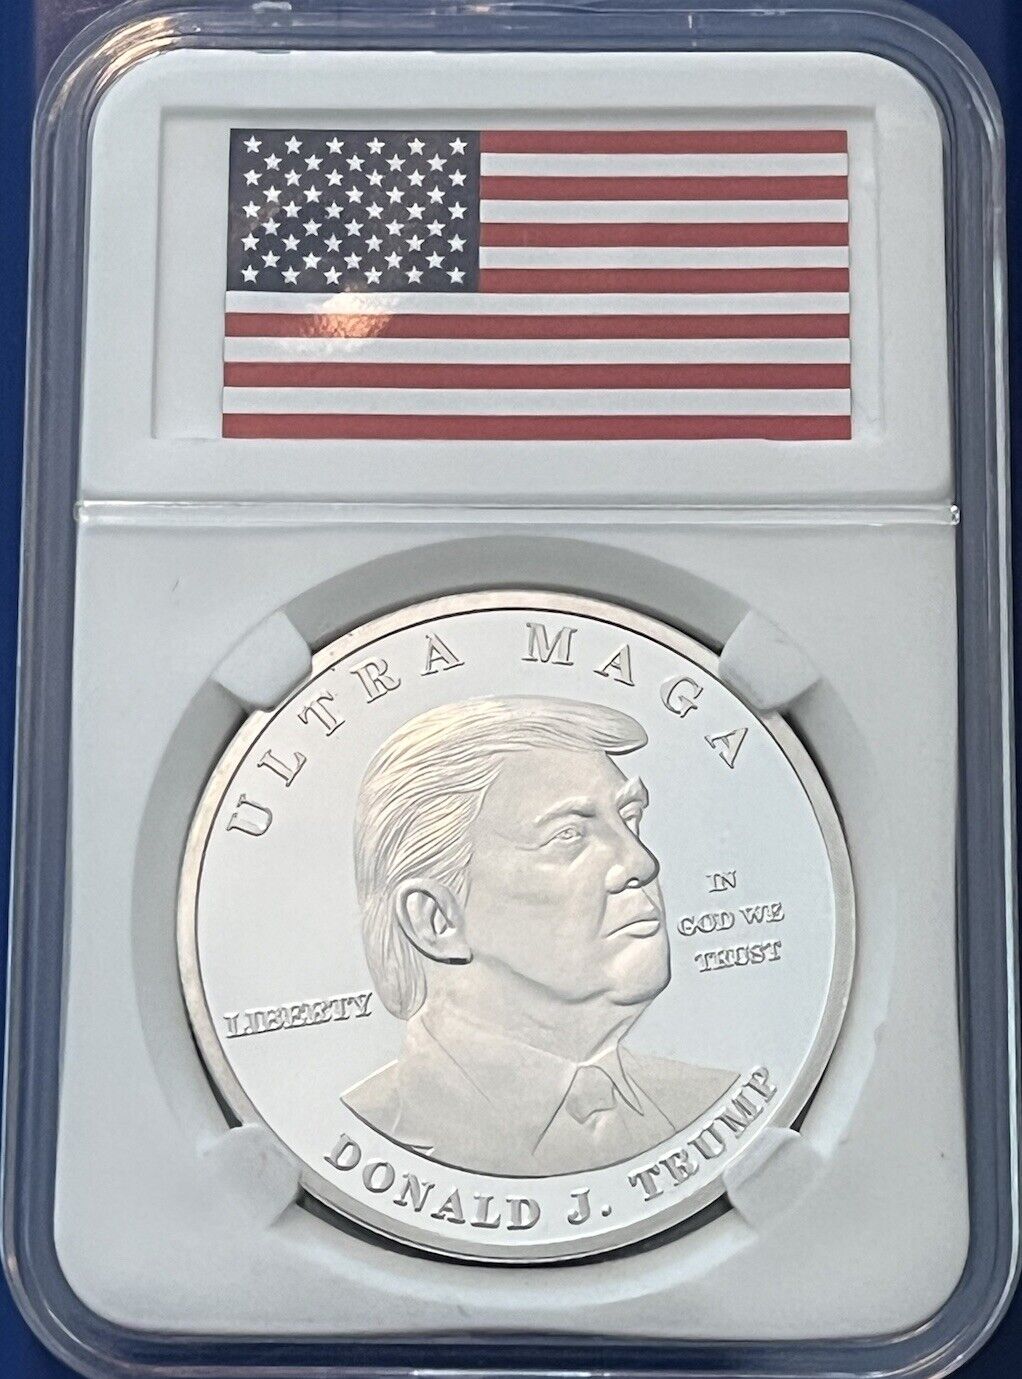 Donald Trump ULTRA MAGA Commemorative Coin